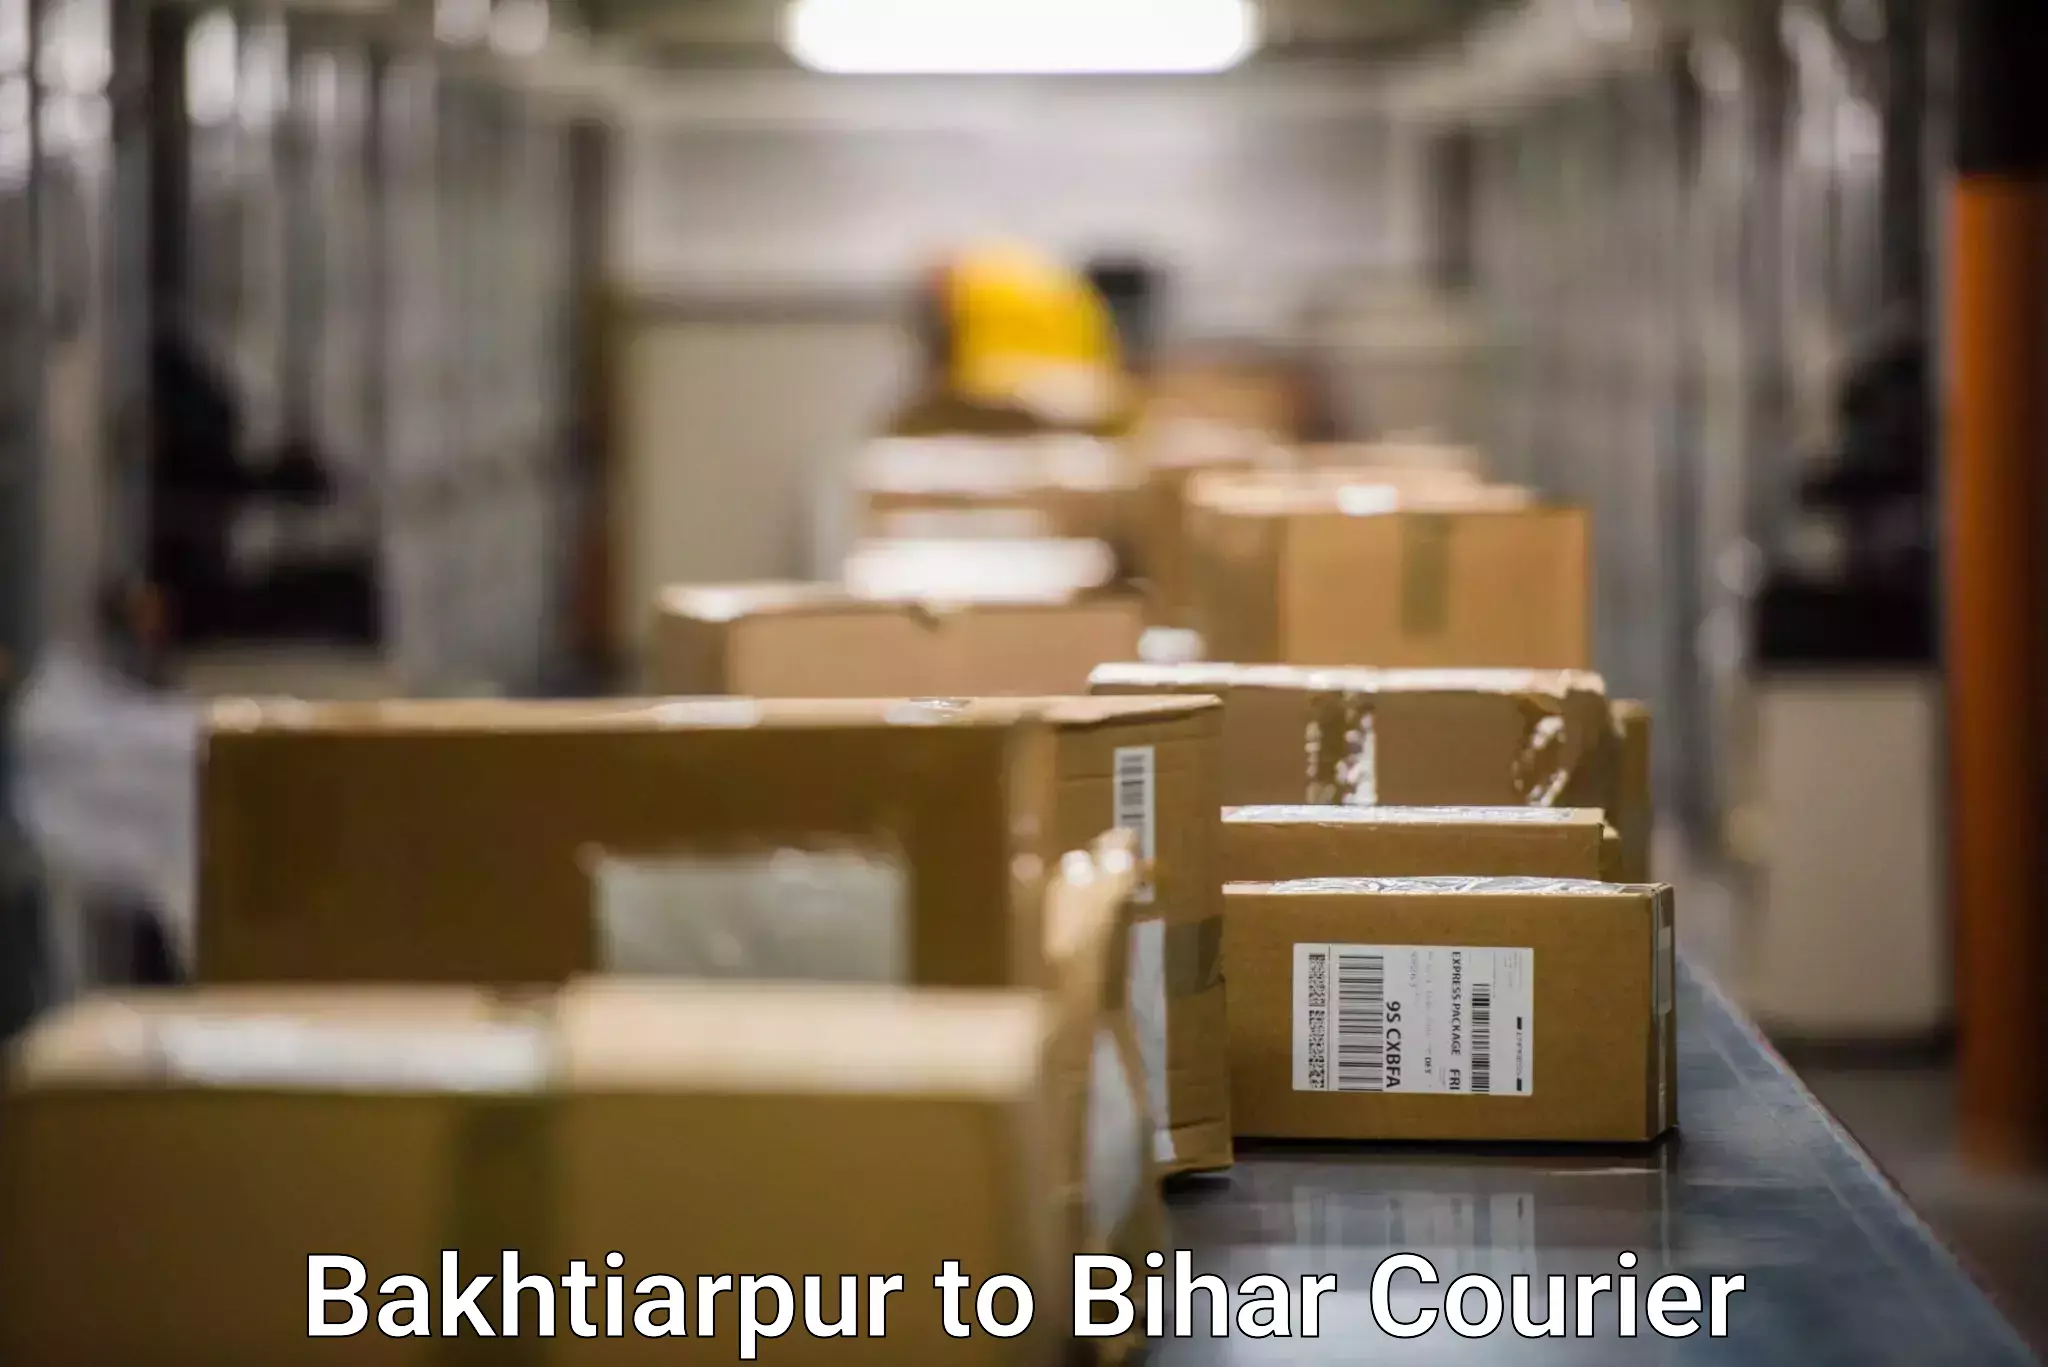 Quick dispatch service Bakhtiarpur to Bihar